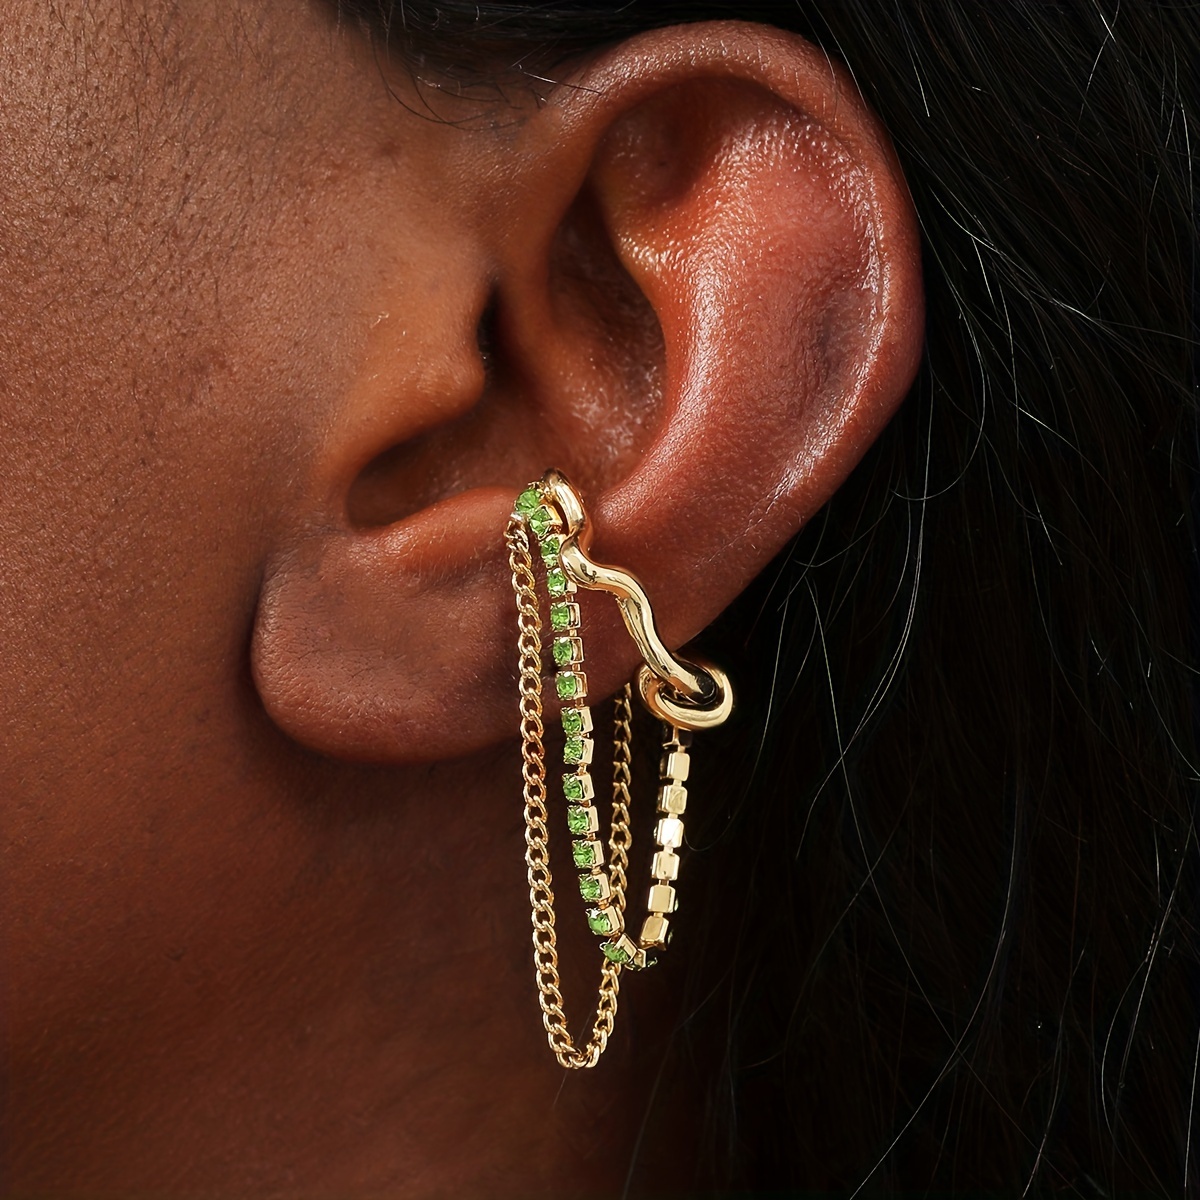  Ear Cuff Chain Earrings Sparkling Rhinestone Long